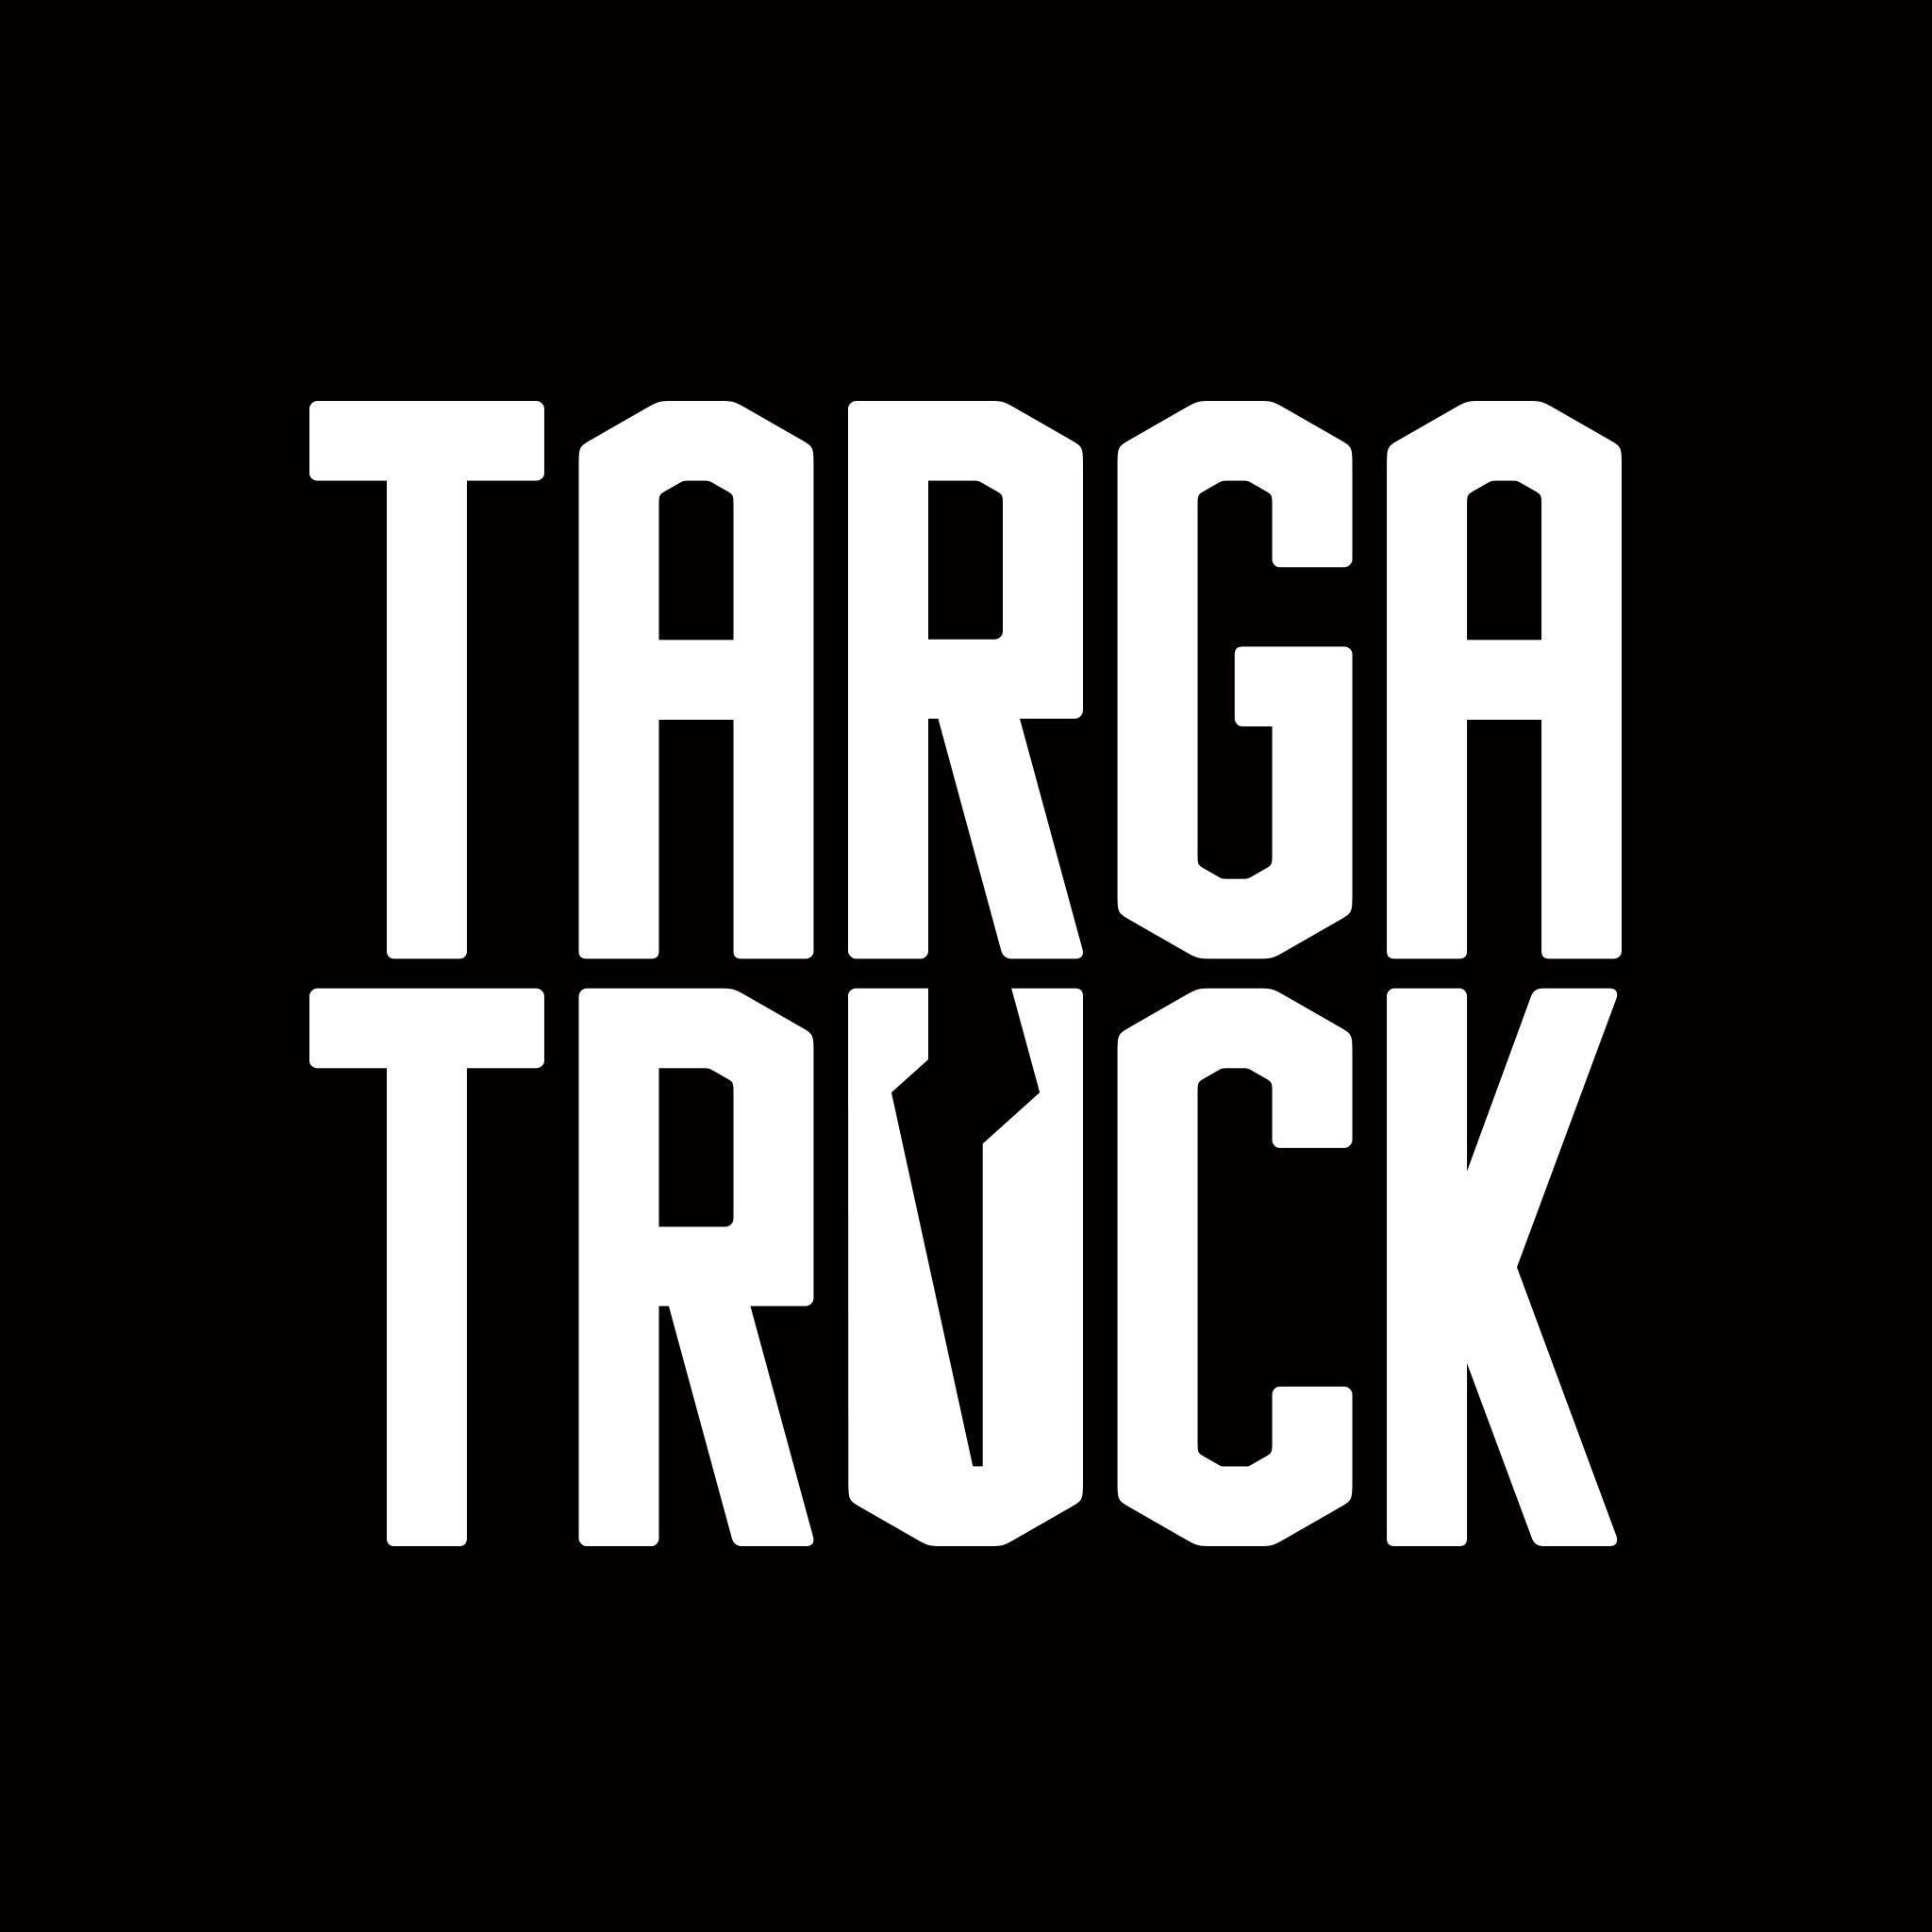 Targa Logo - The Targa Truck logo - square The First Truck in Targa Newfoundland ...